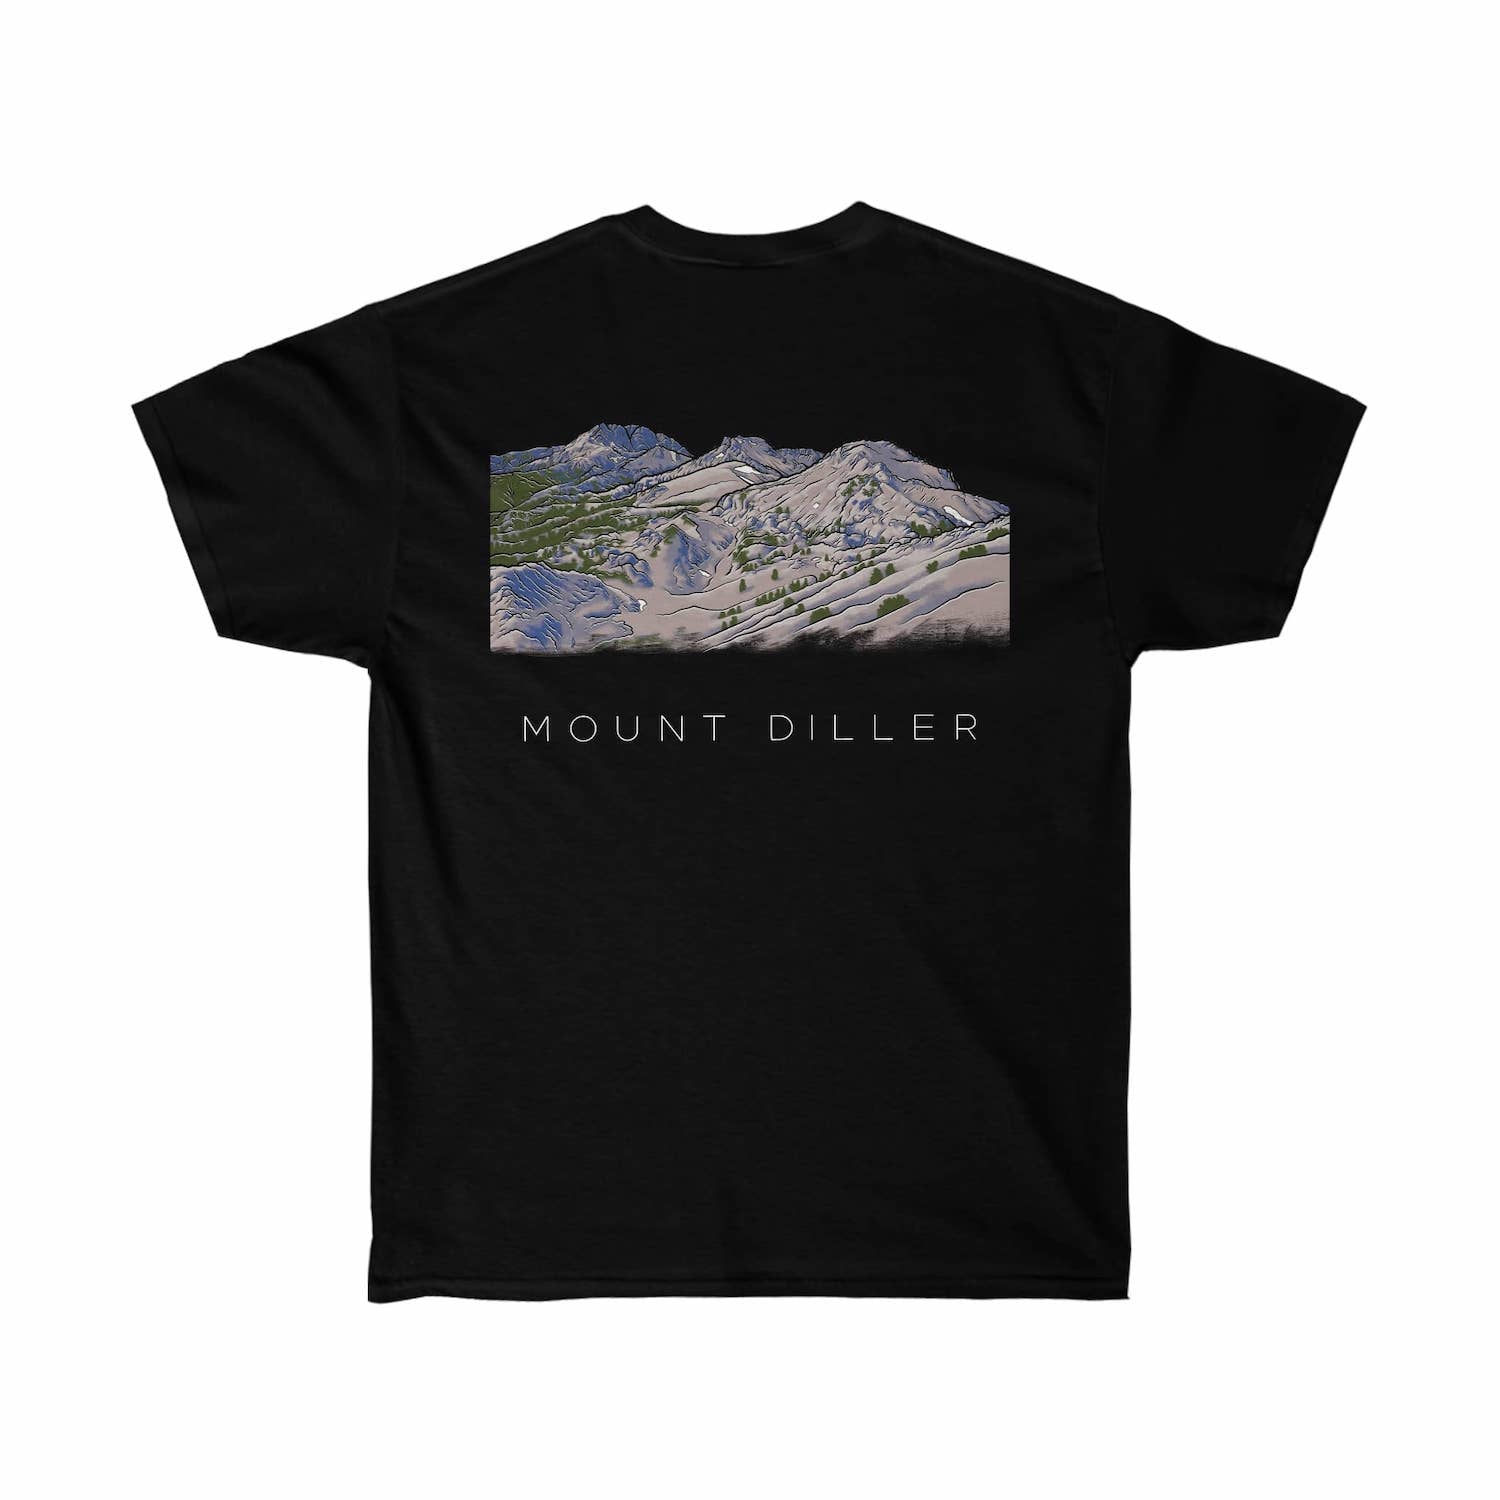 Mount Diller